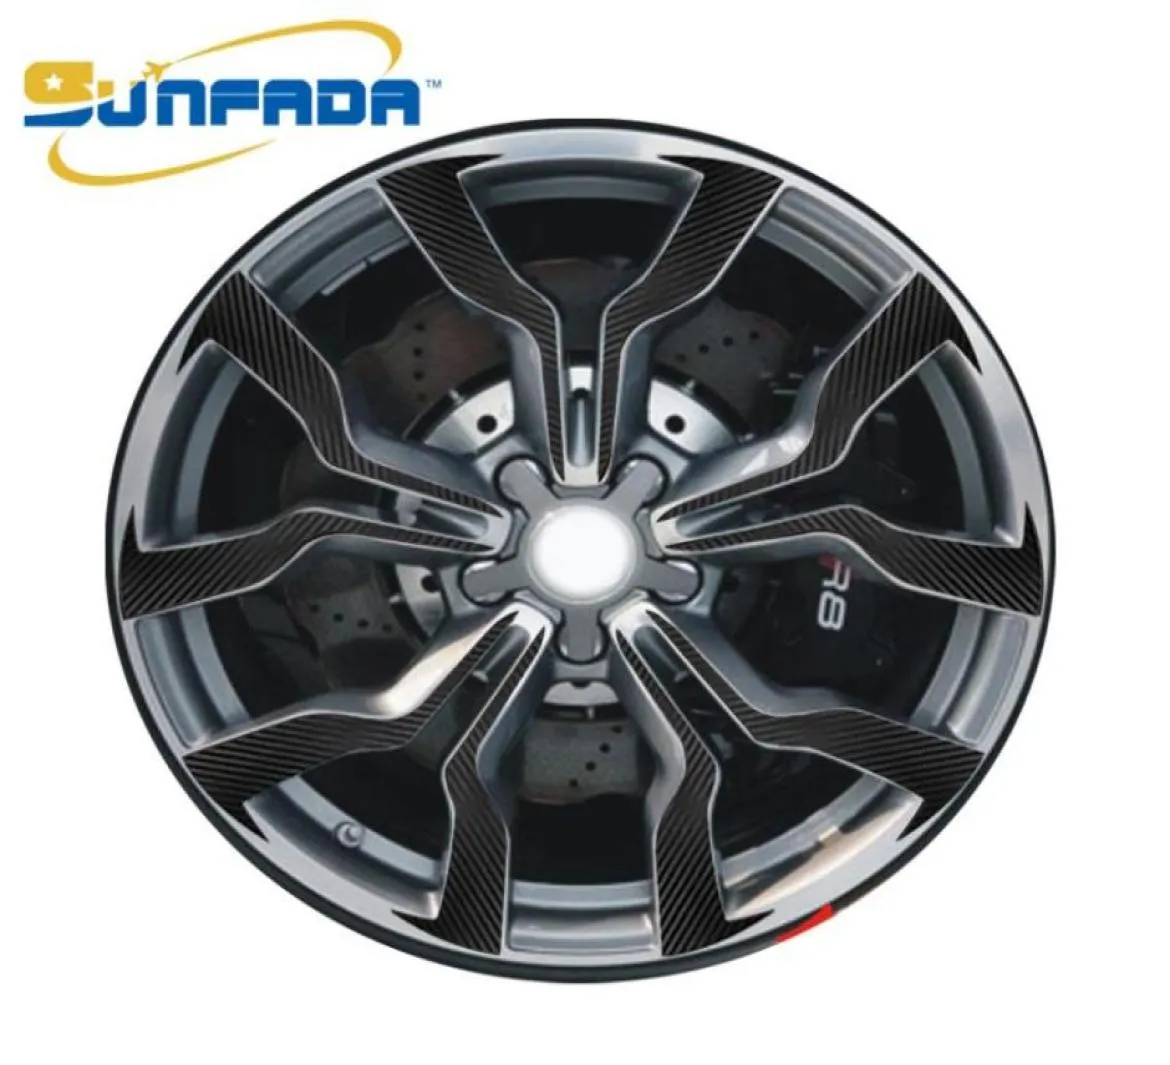 Black Wheel Hub Carbon Fiber Car Stickers för R8 Extern dekalbilstyling 18 tum 19 tum hjul46956756521914